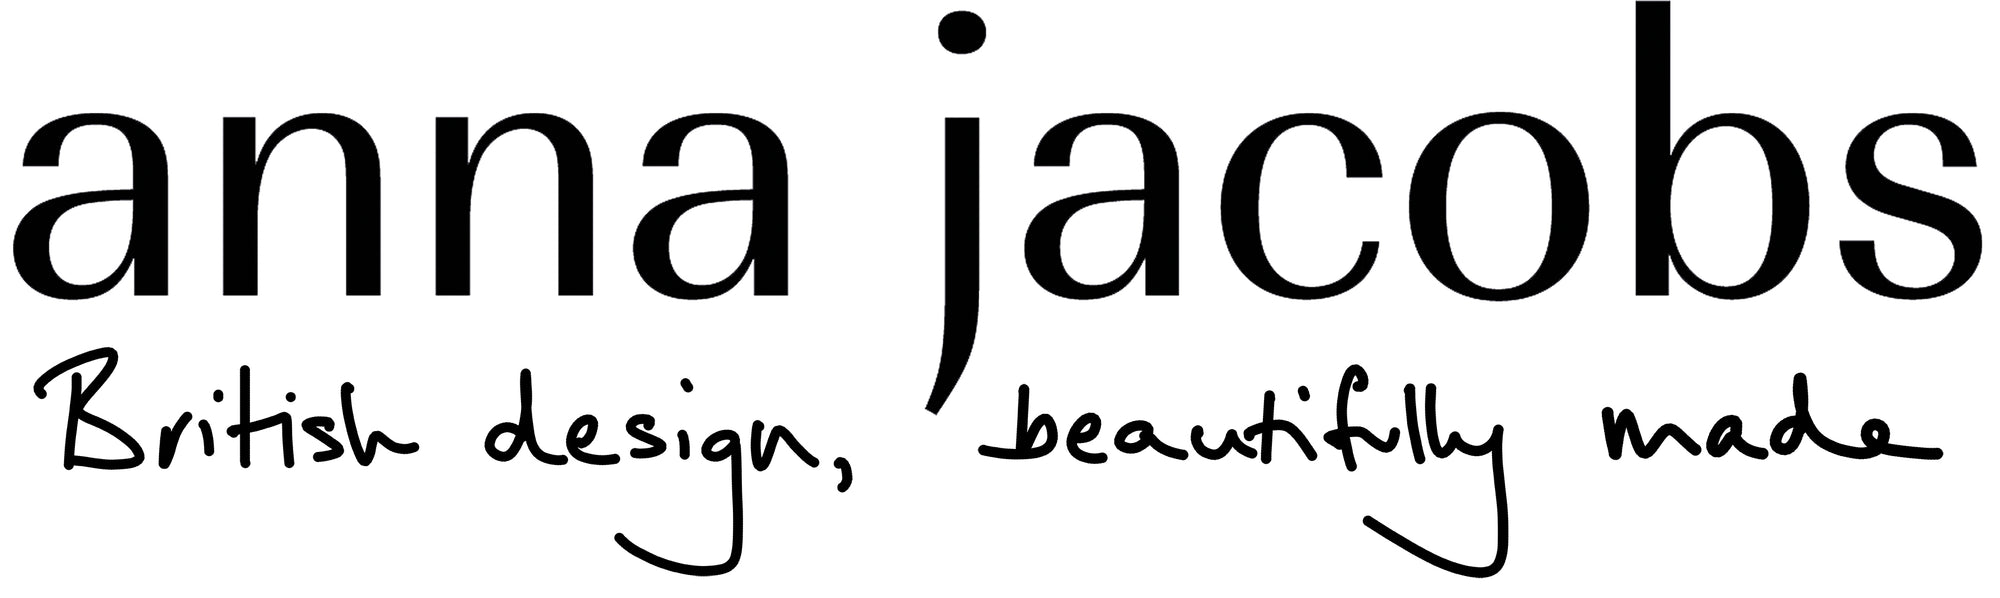 Anna Jacobs logo, British design, beautifully made